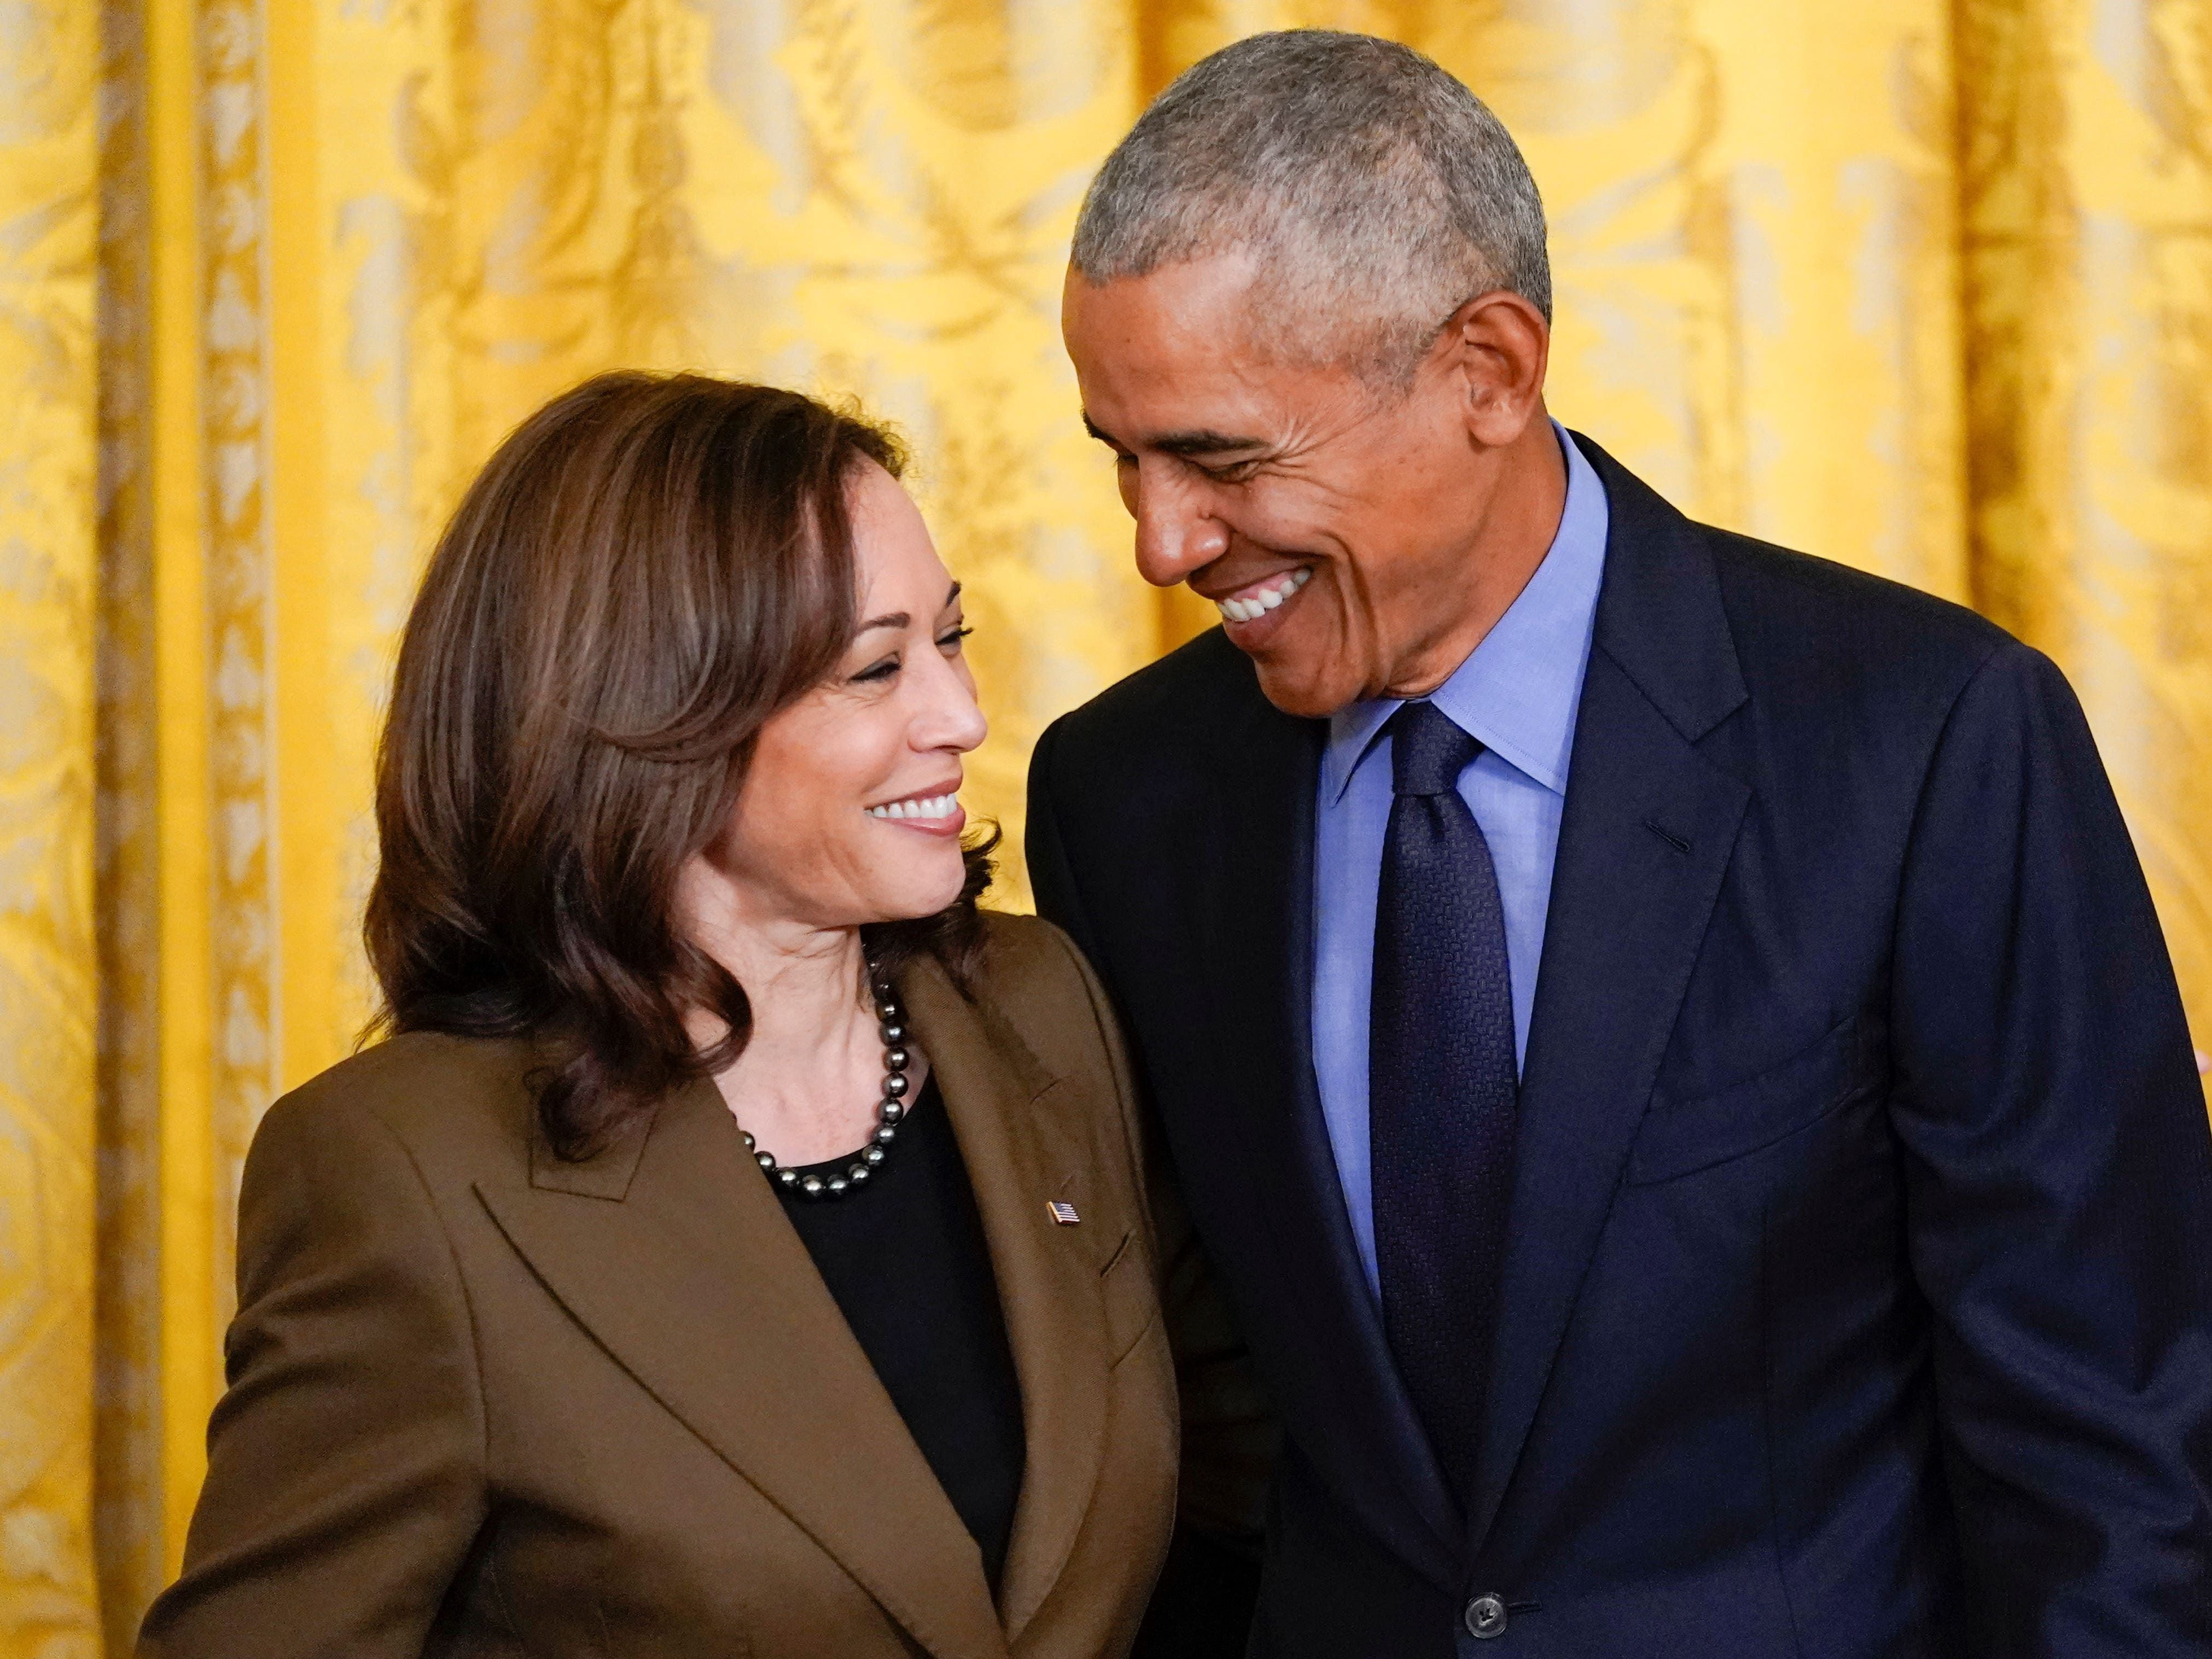 Barack and Michelle Obama give endorsement for Kamala Harris’s White House bid